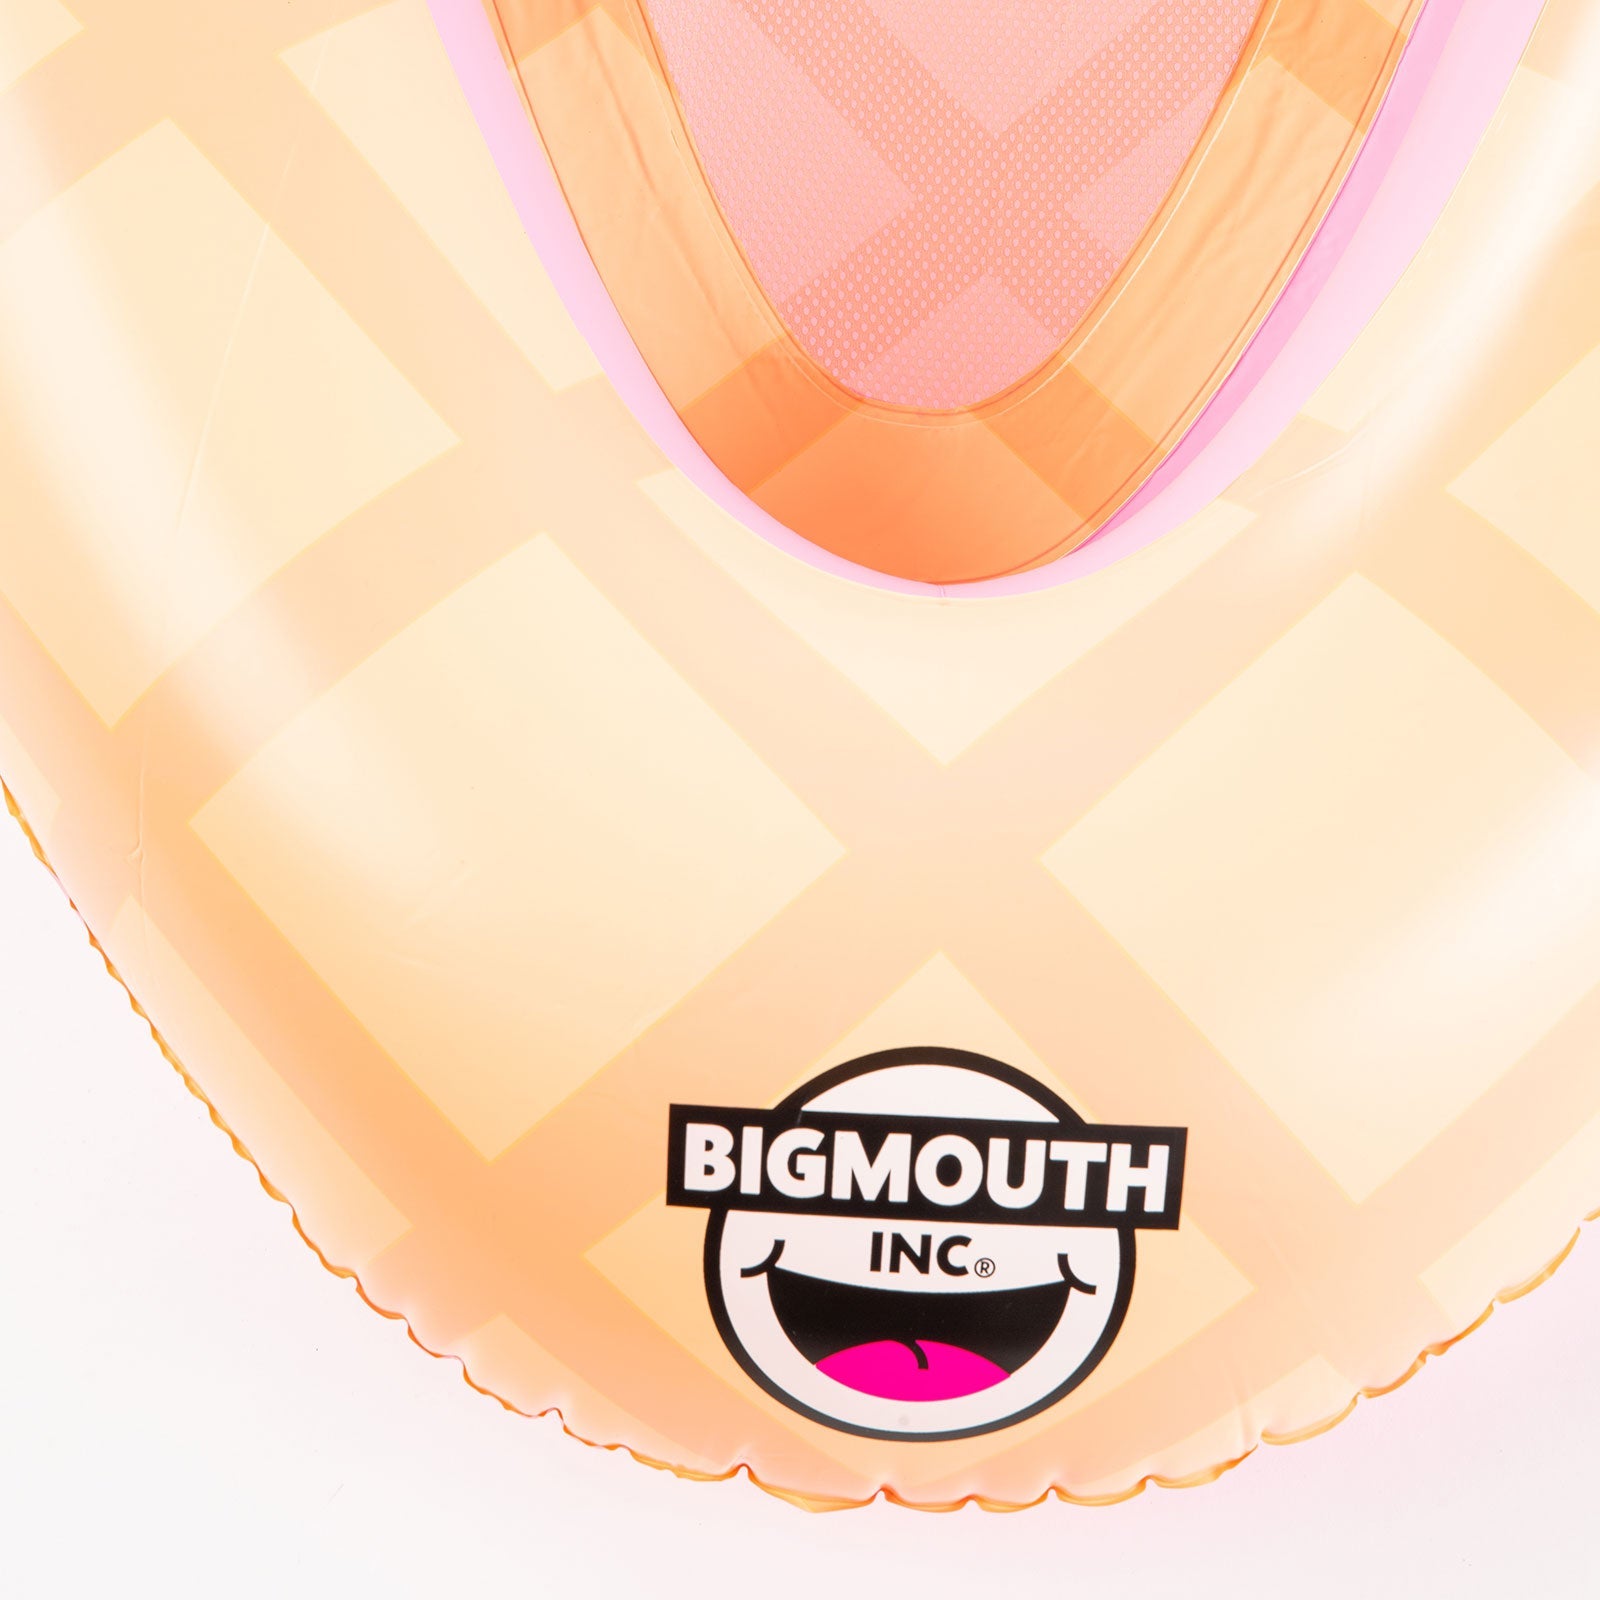 Ice Cream Mesh Hammock Float - Pink